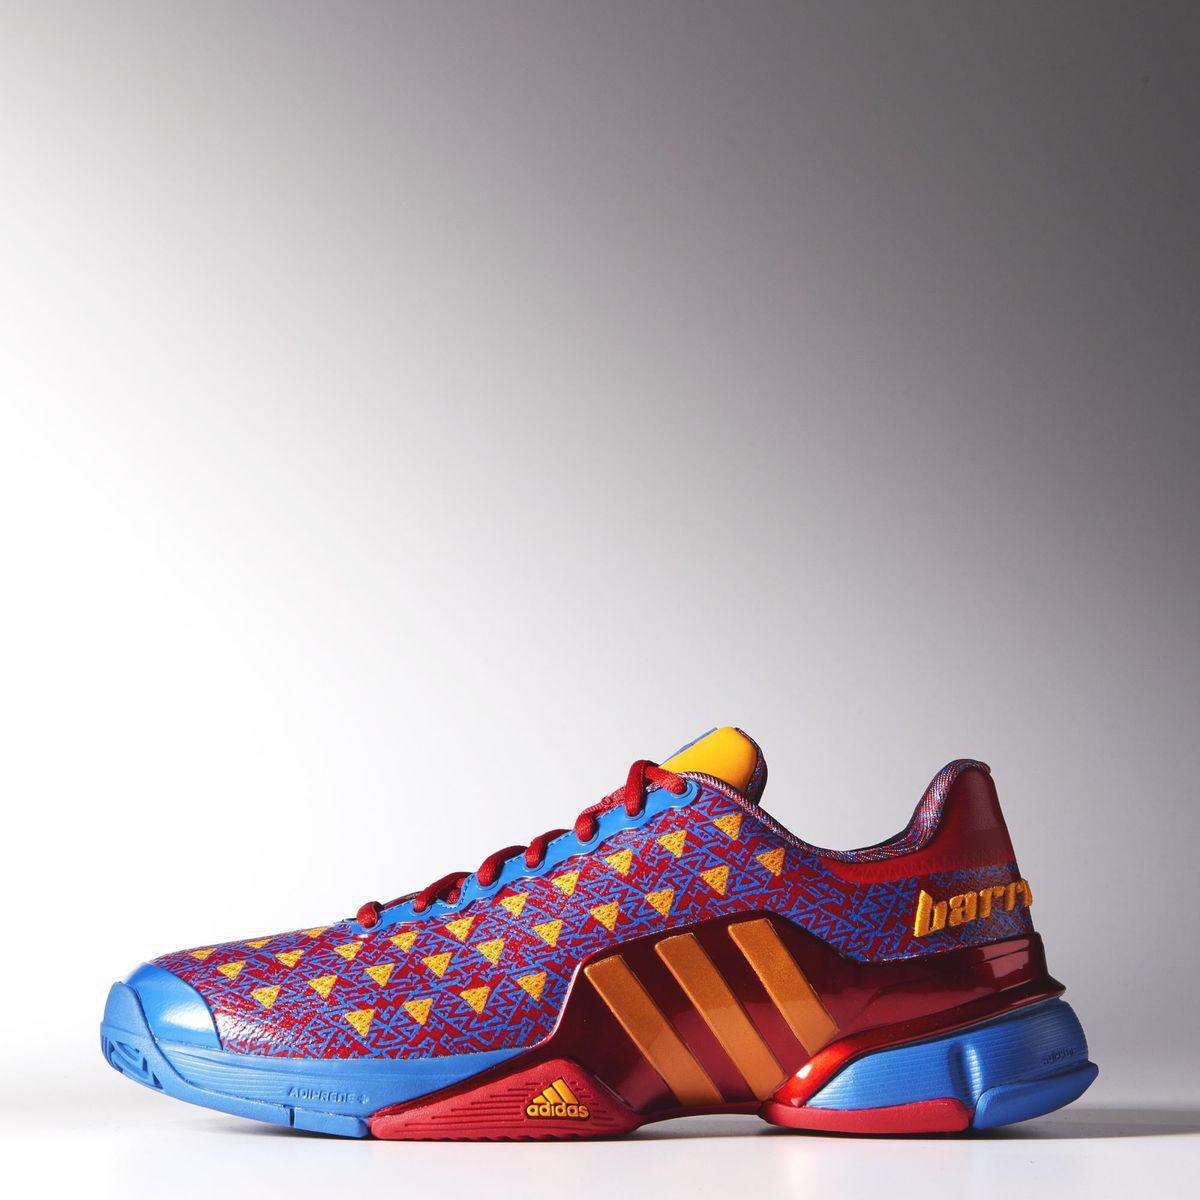 Adidas Mens Barricade 2015 Saksaywaman Tennis Shoes - Limited Edition -  